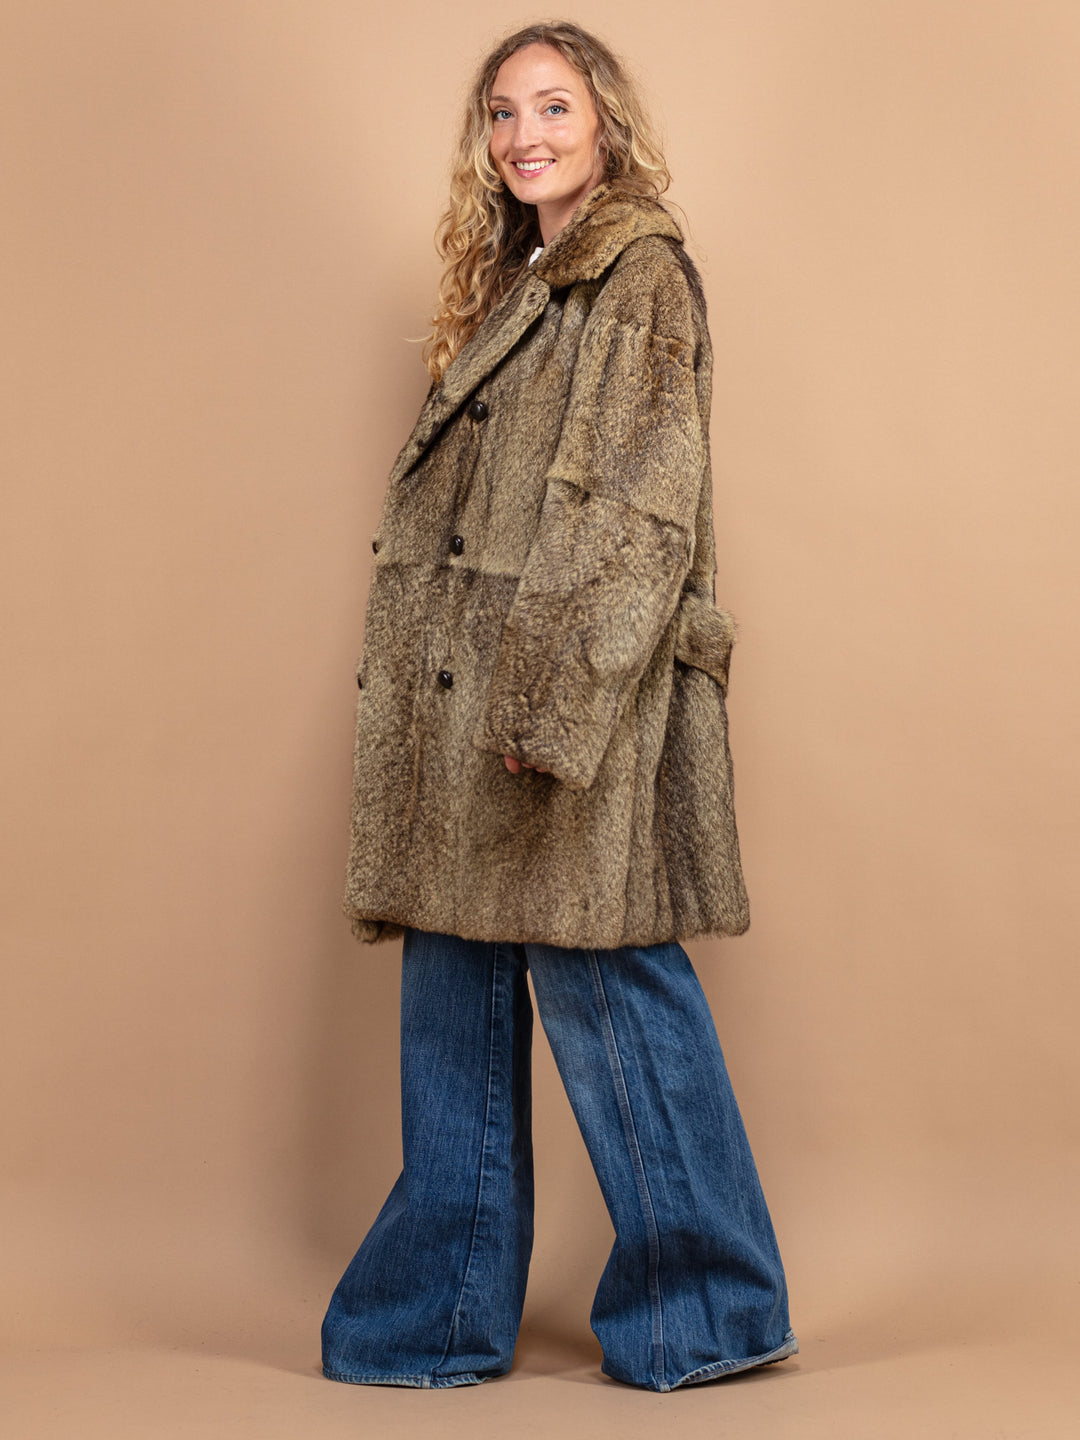 Oversized Fur Coat, Size Large L Fur Coat, 80's Luxurious Coat, Beige Fur Overcoat, Penny Lane Fur Coat, Retro Chic Fur Coat, 80s Outerwear